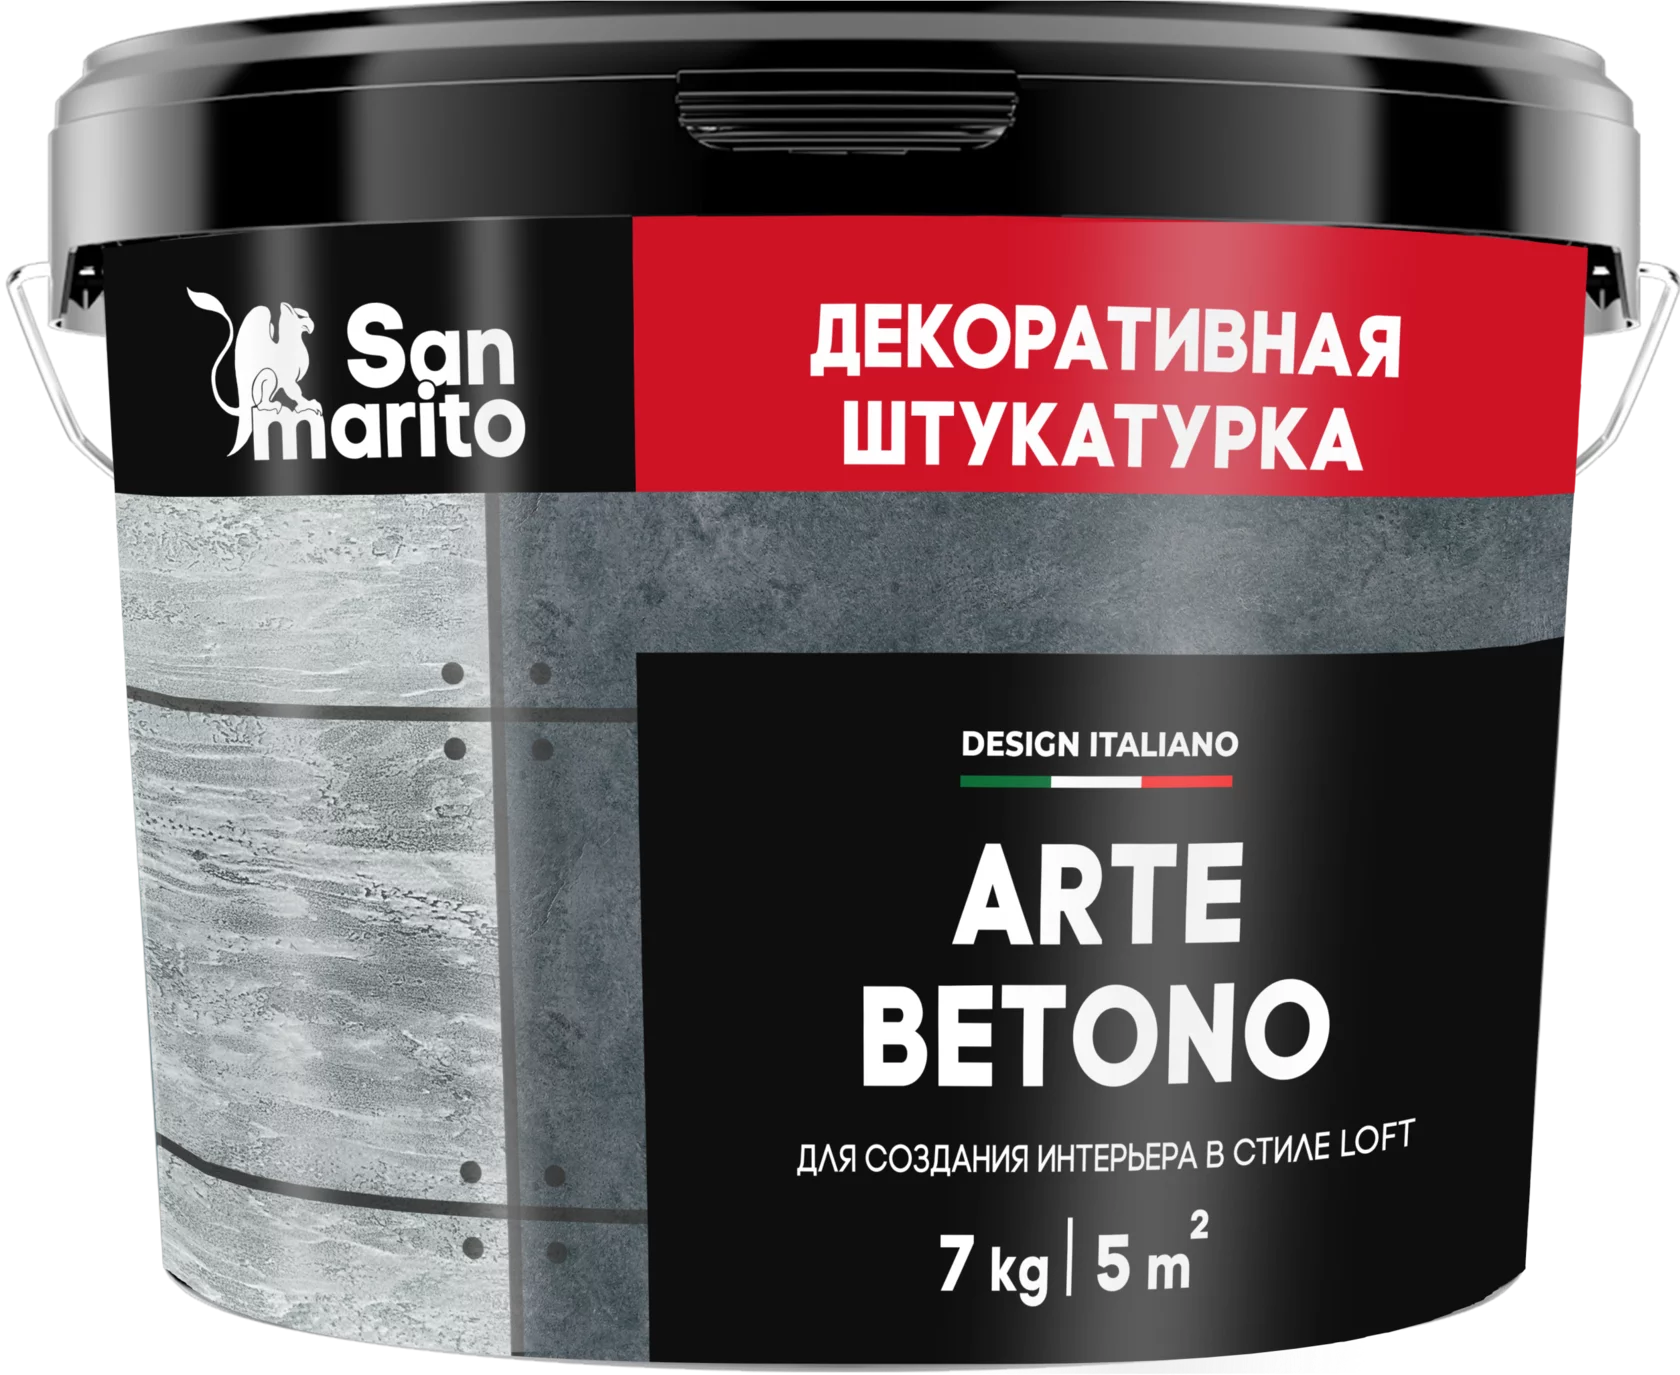 Штукатурка декоративная "San marito Arte-Betono" 7 кг